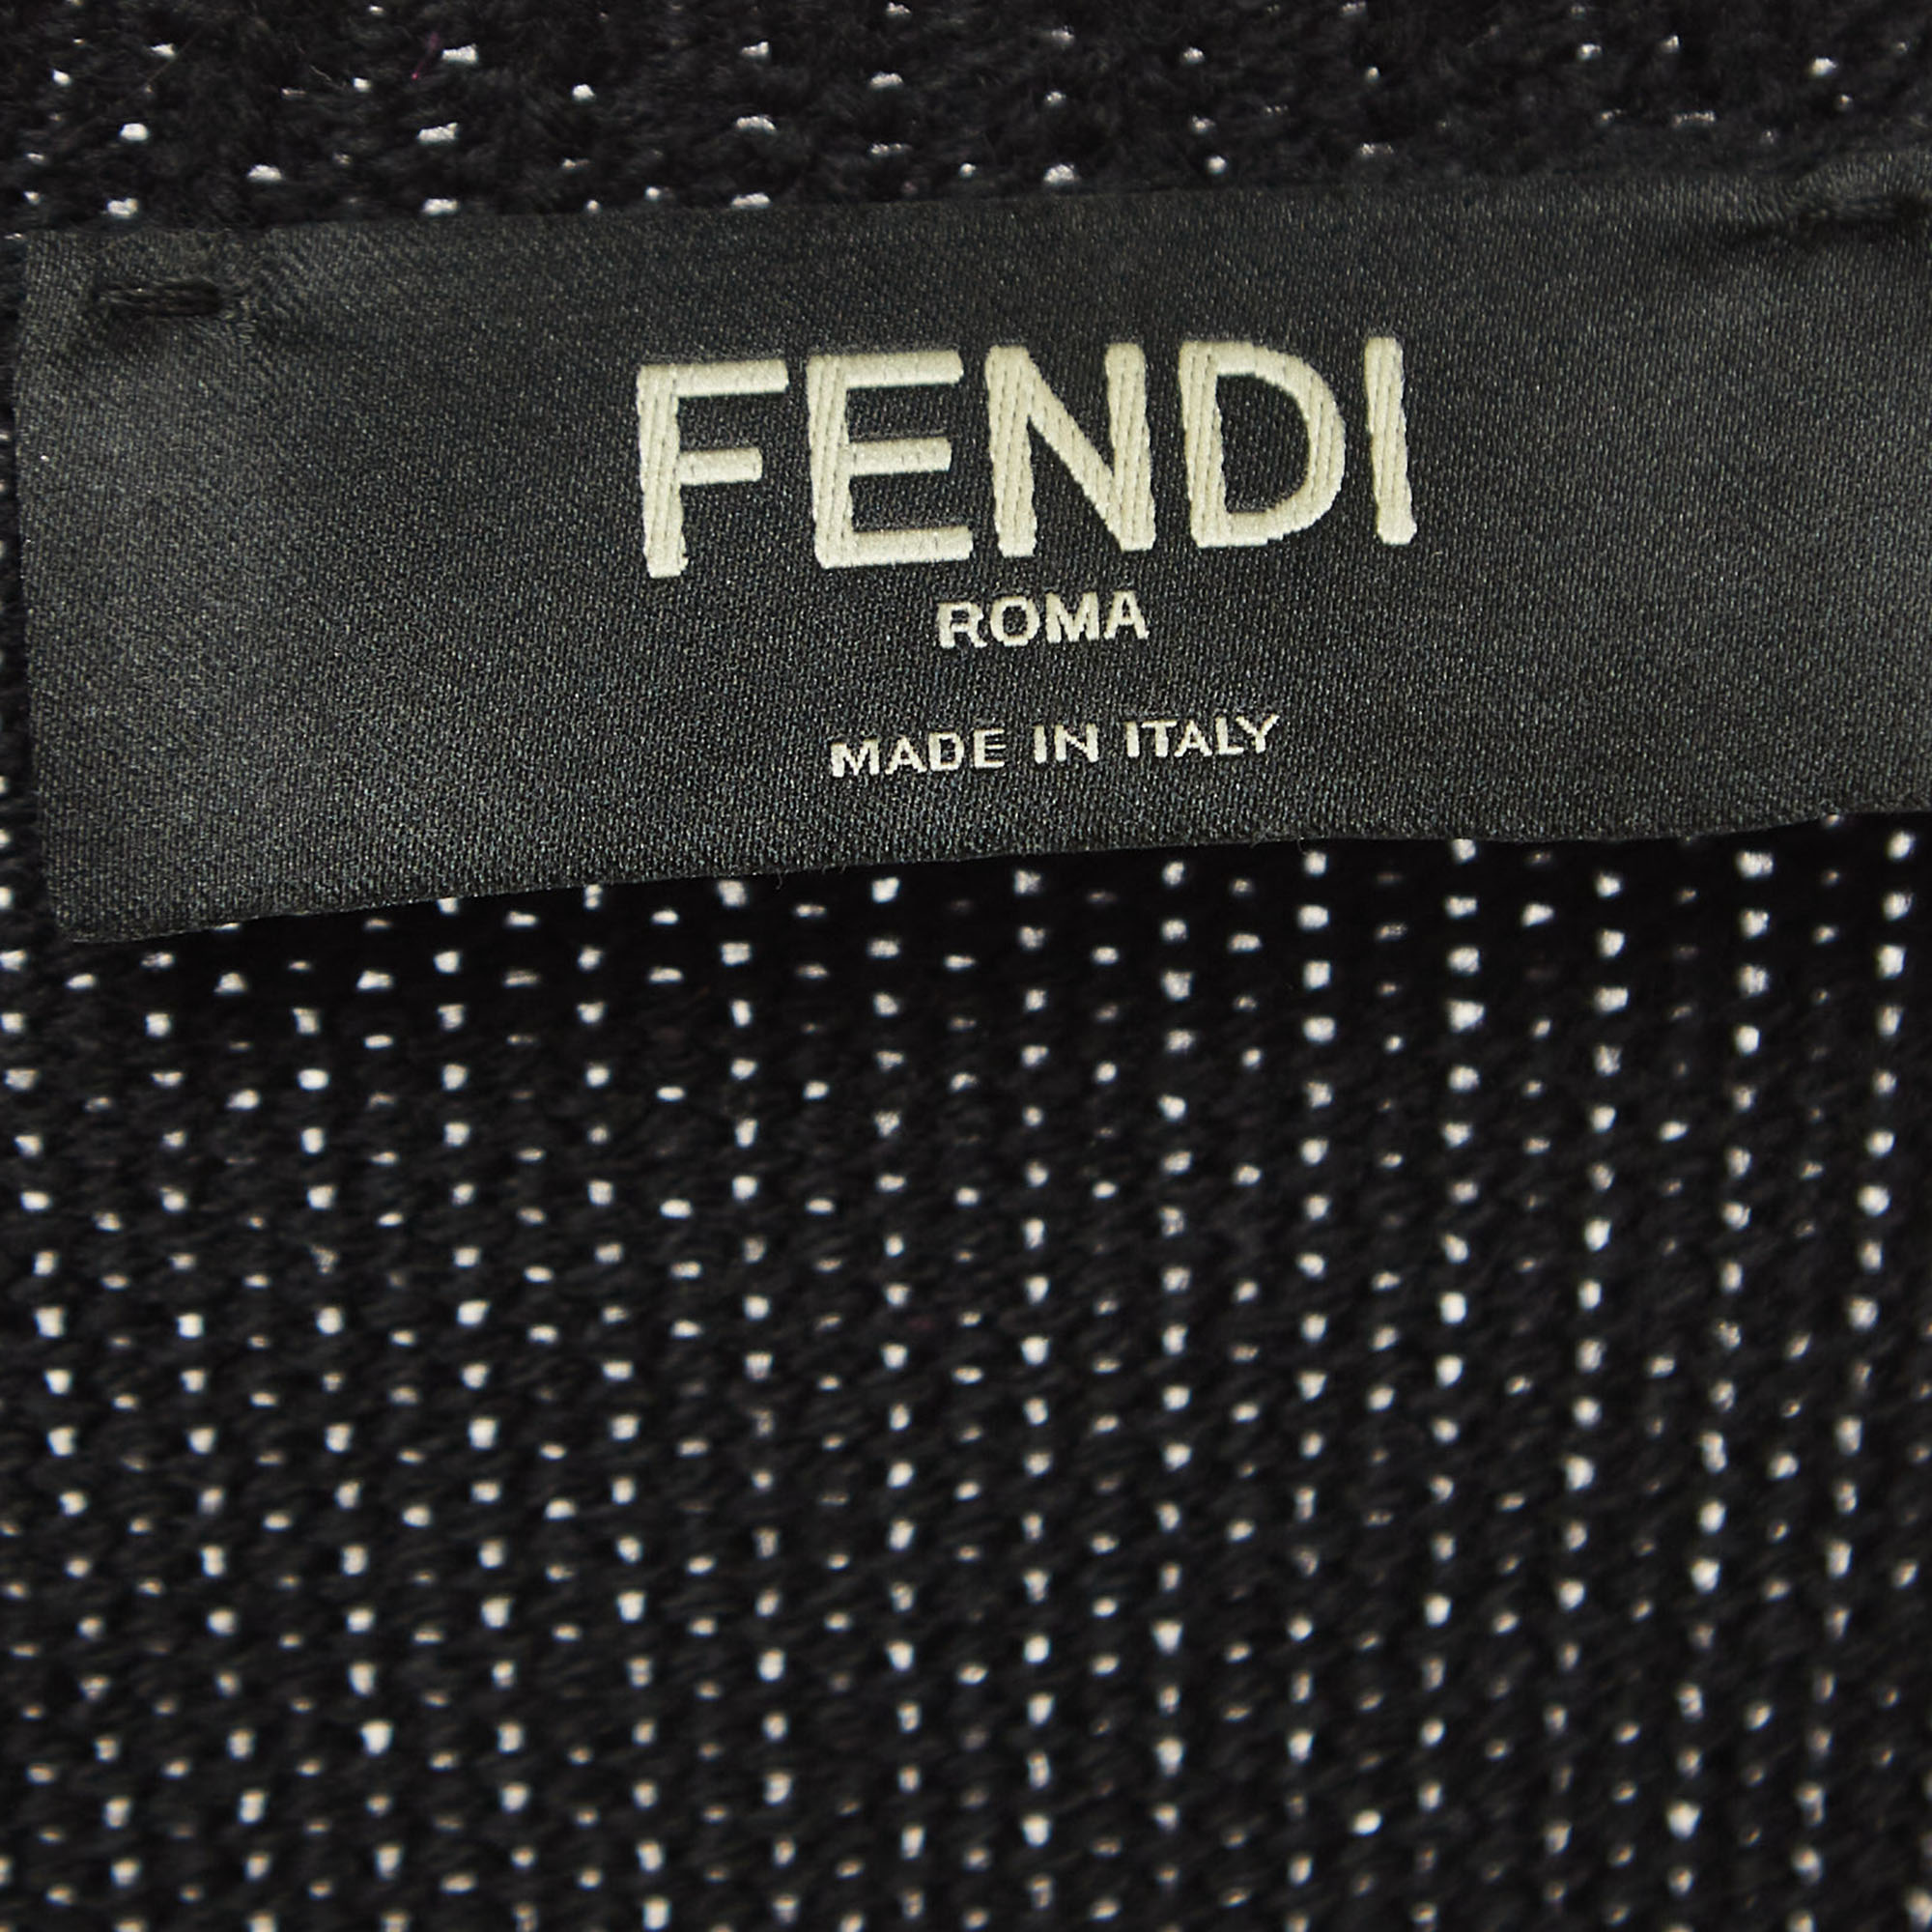 Fendi Black Logo Intarsia Wool Sweater M